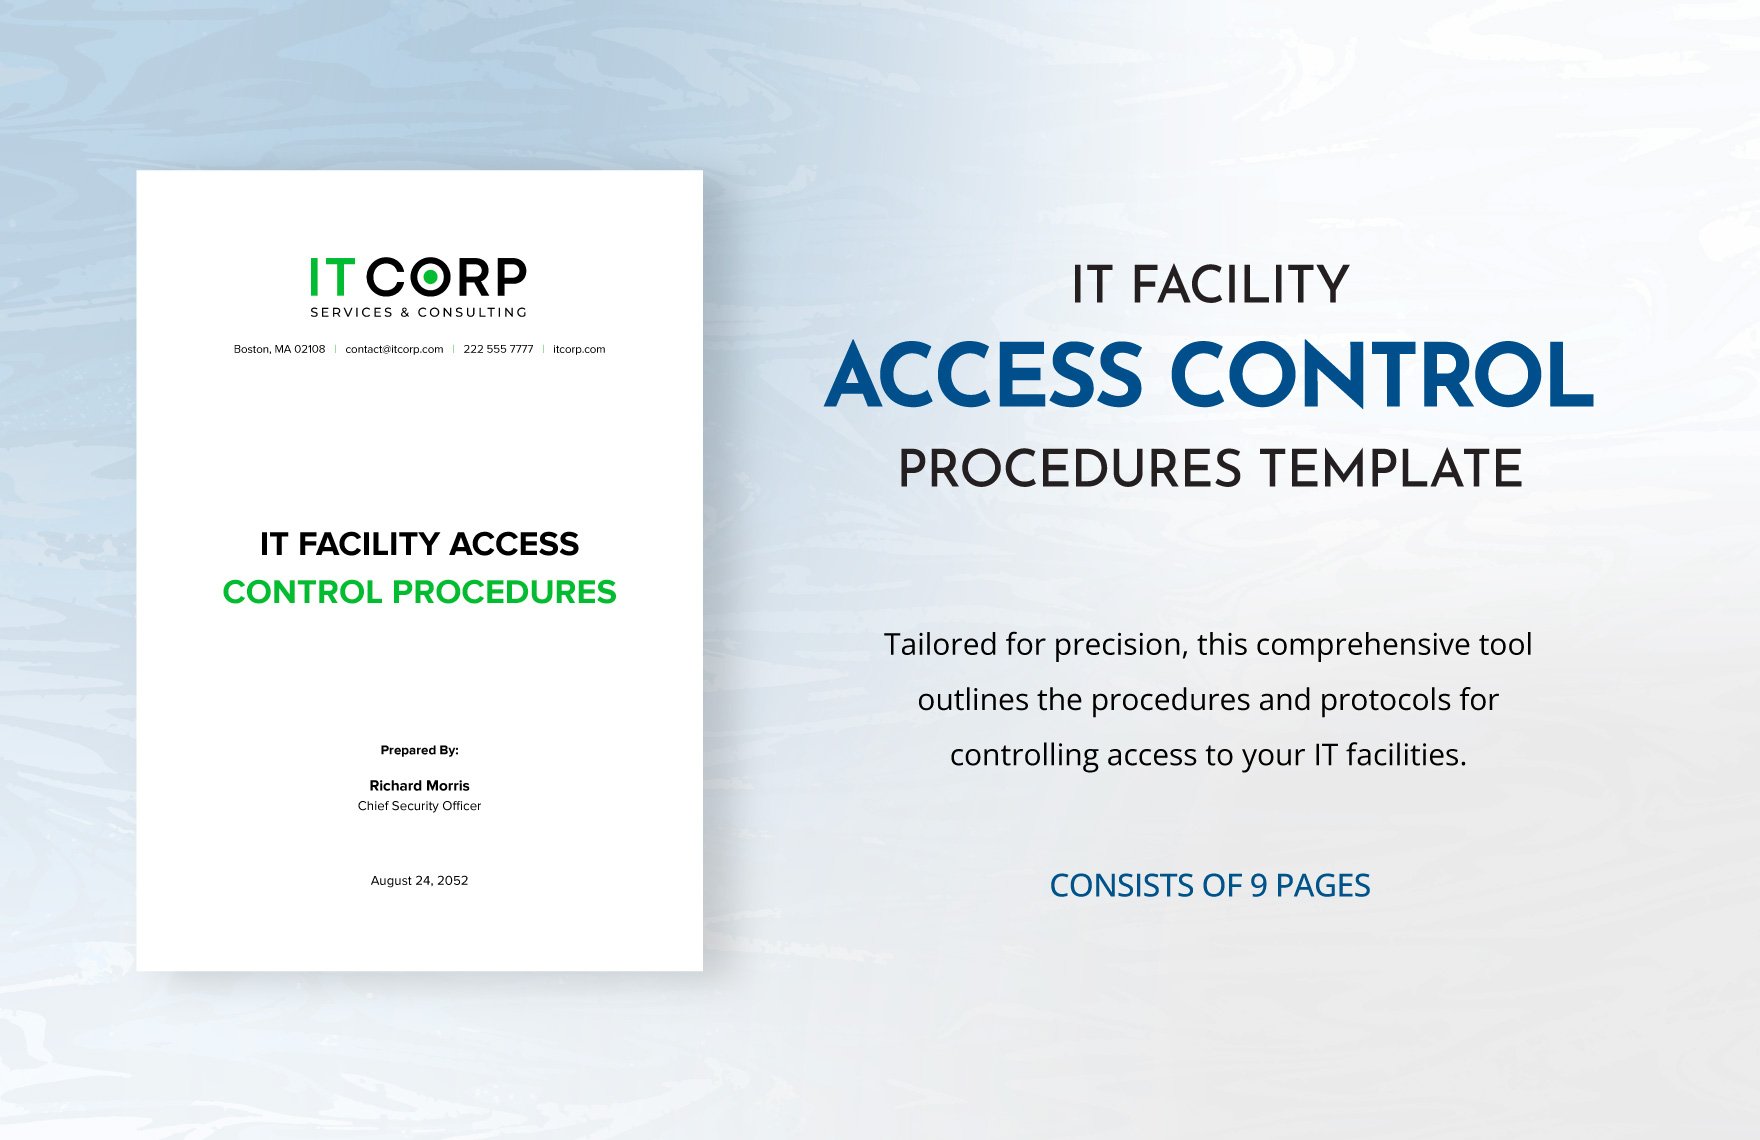 IT Facility Access Control Procedures Template